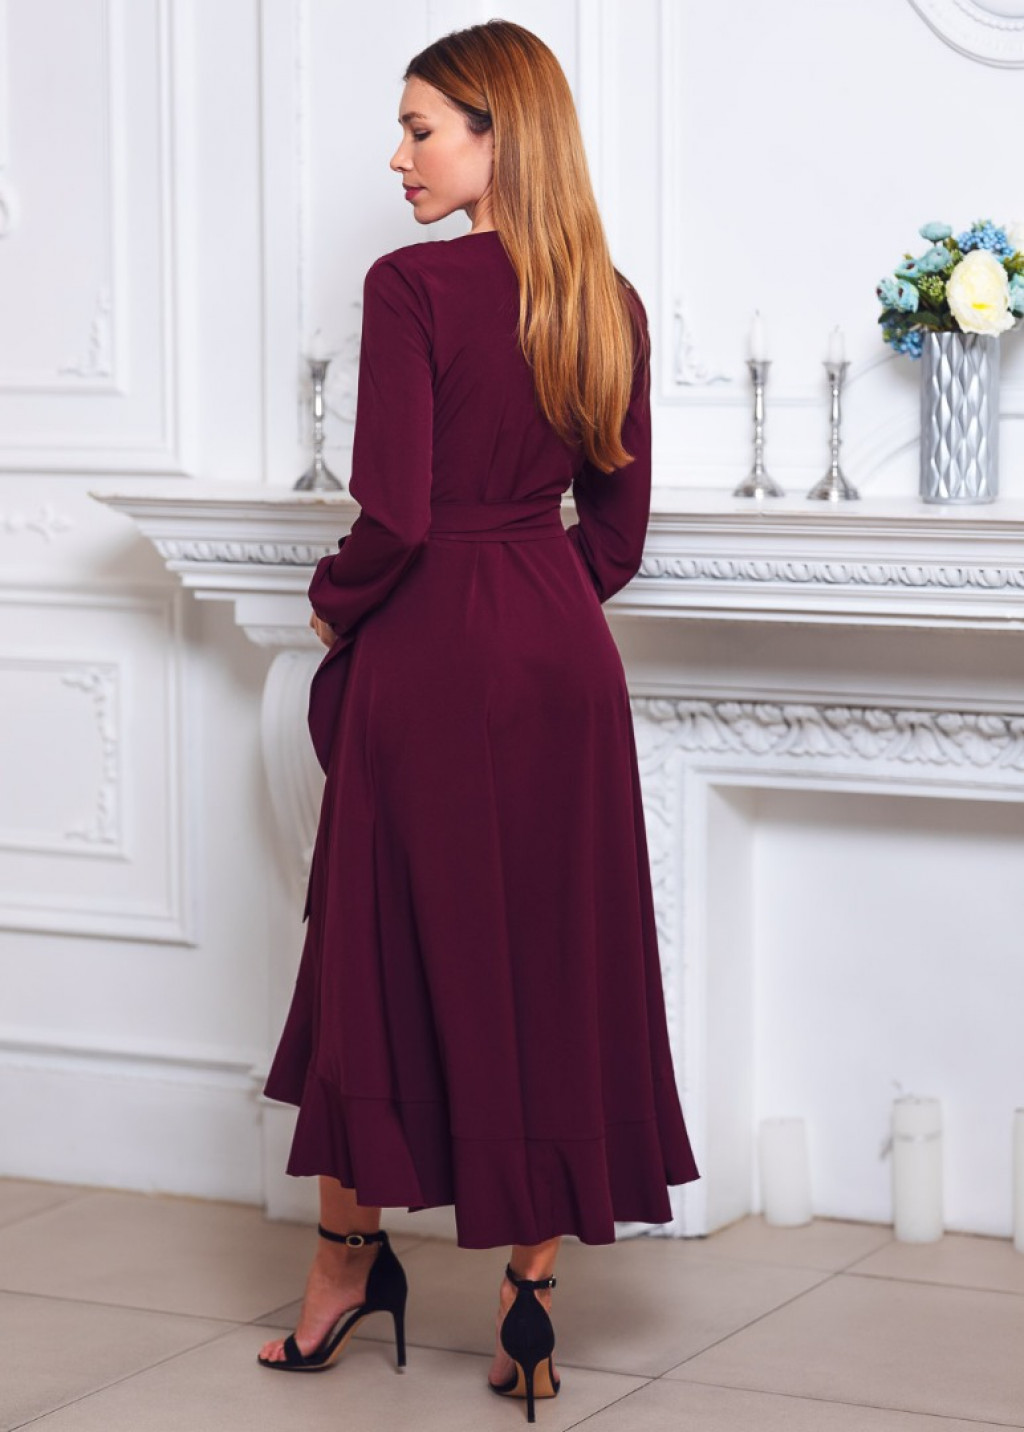 Dark burgundy wrap dress